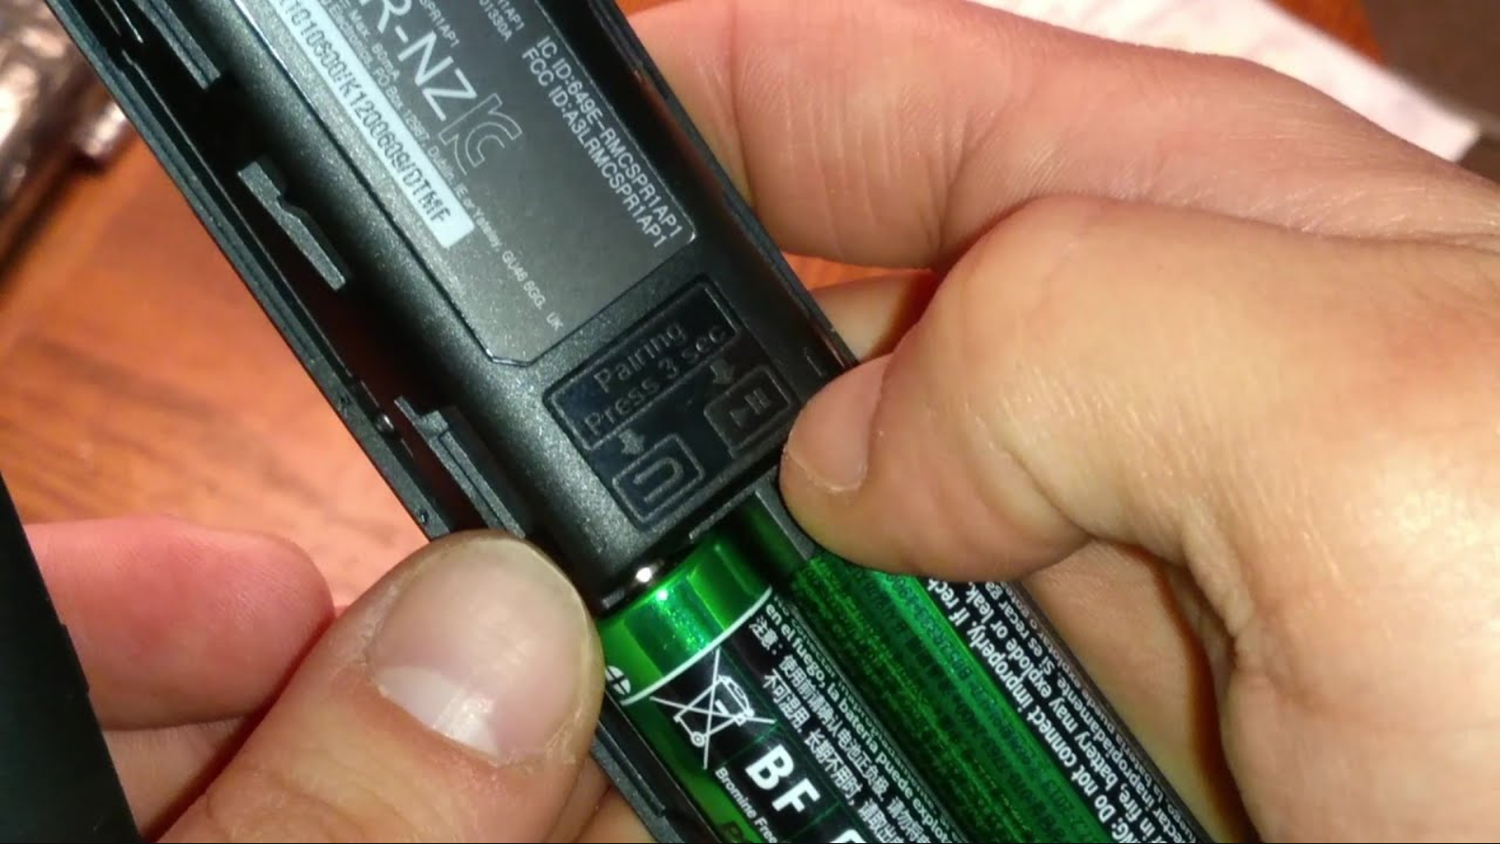 insert new batteries